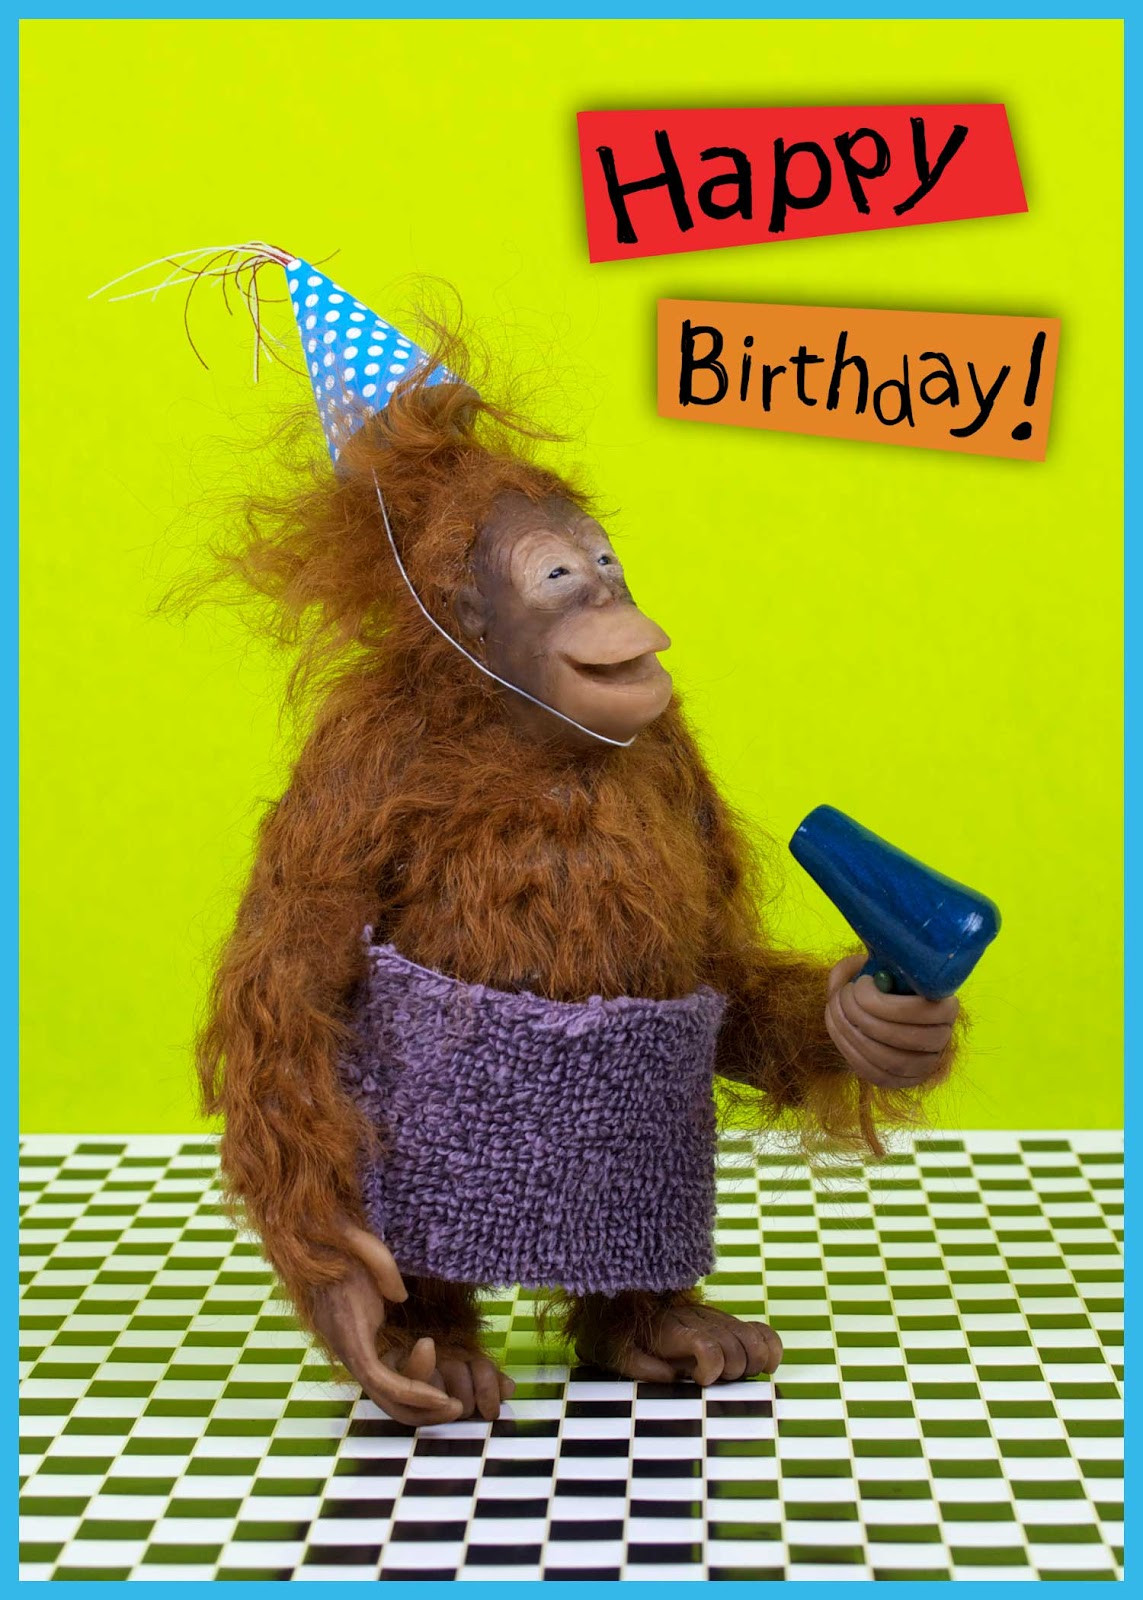 Birthday Greetings Funny
 Caroline Gray Work in Progress Kids’ Birthday Cards